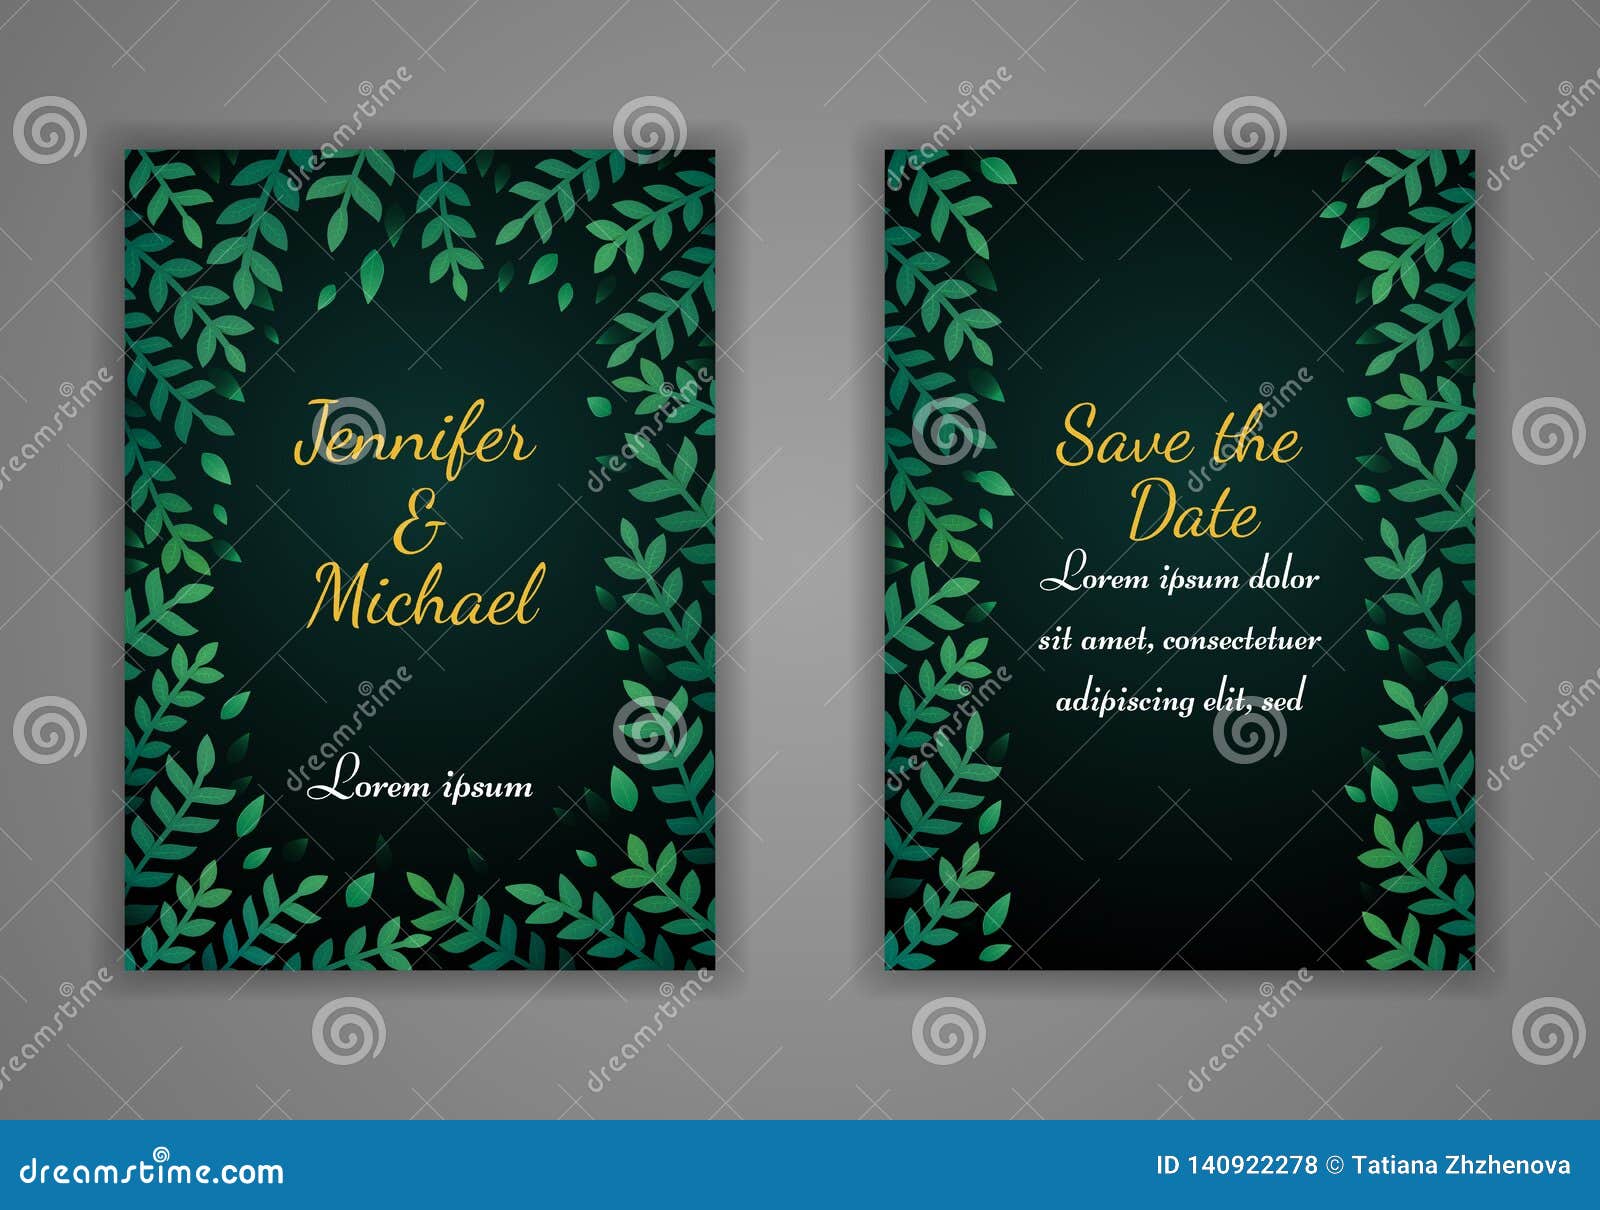 Set of Rectangular Wedding Invitation Cards. Green Leaves Border ...